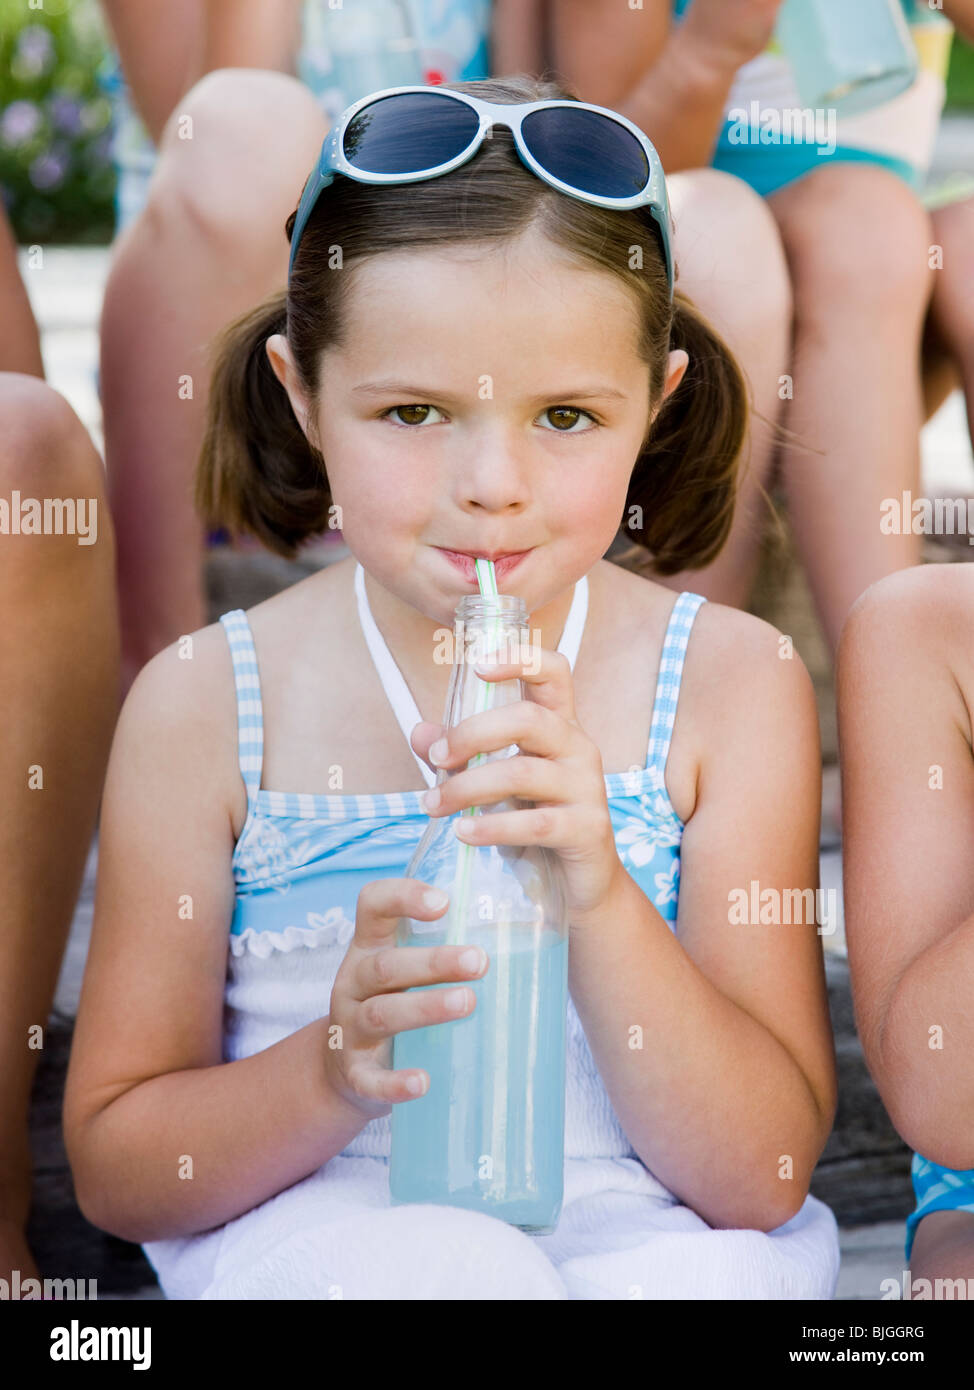 girl drinking a soda Stock Photo